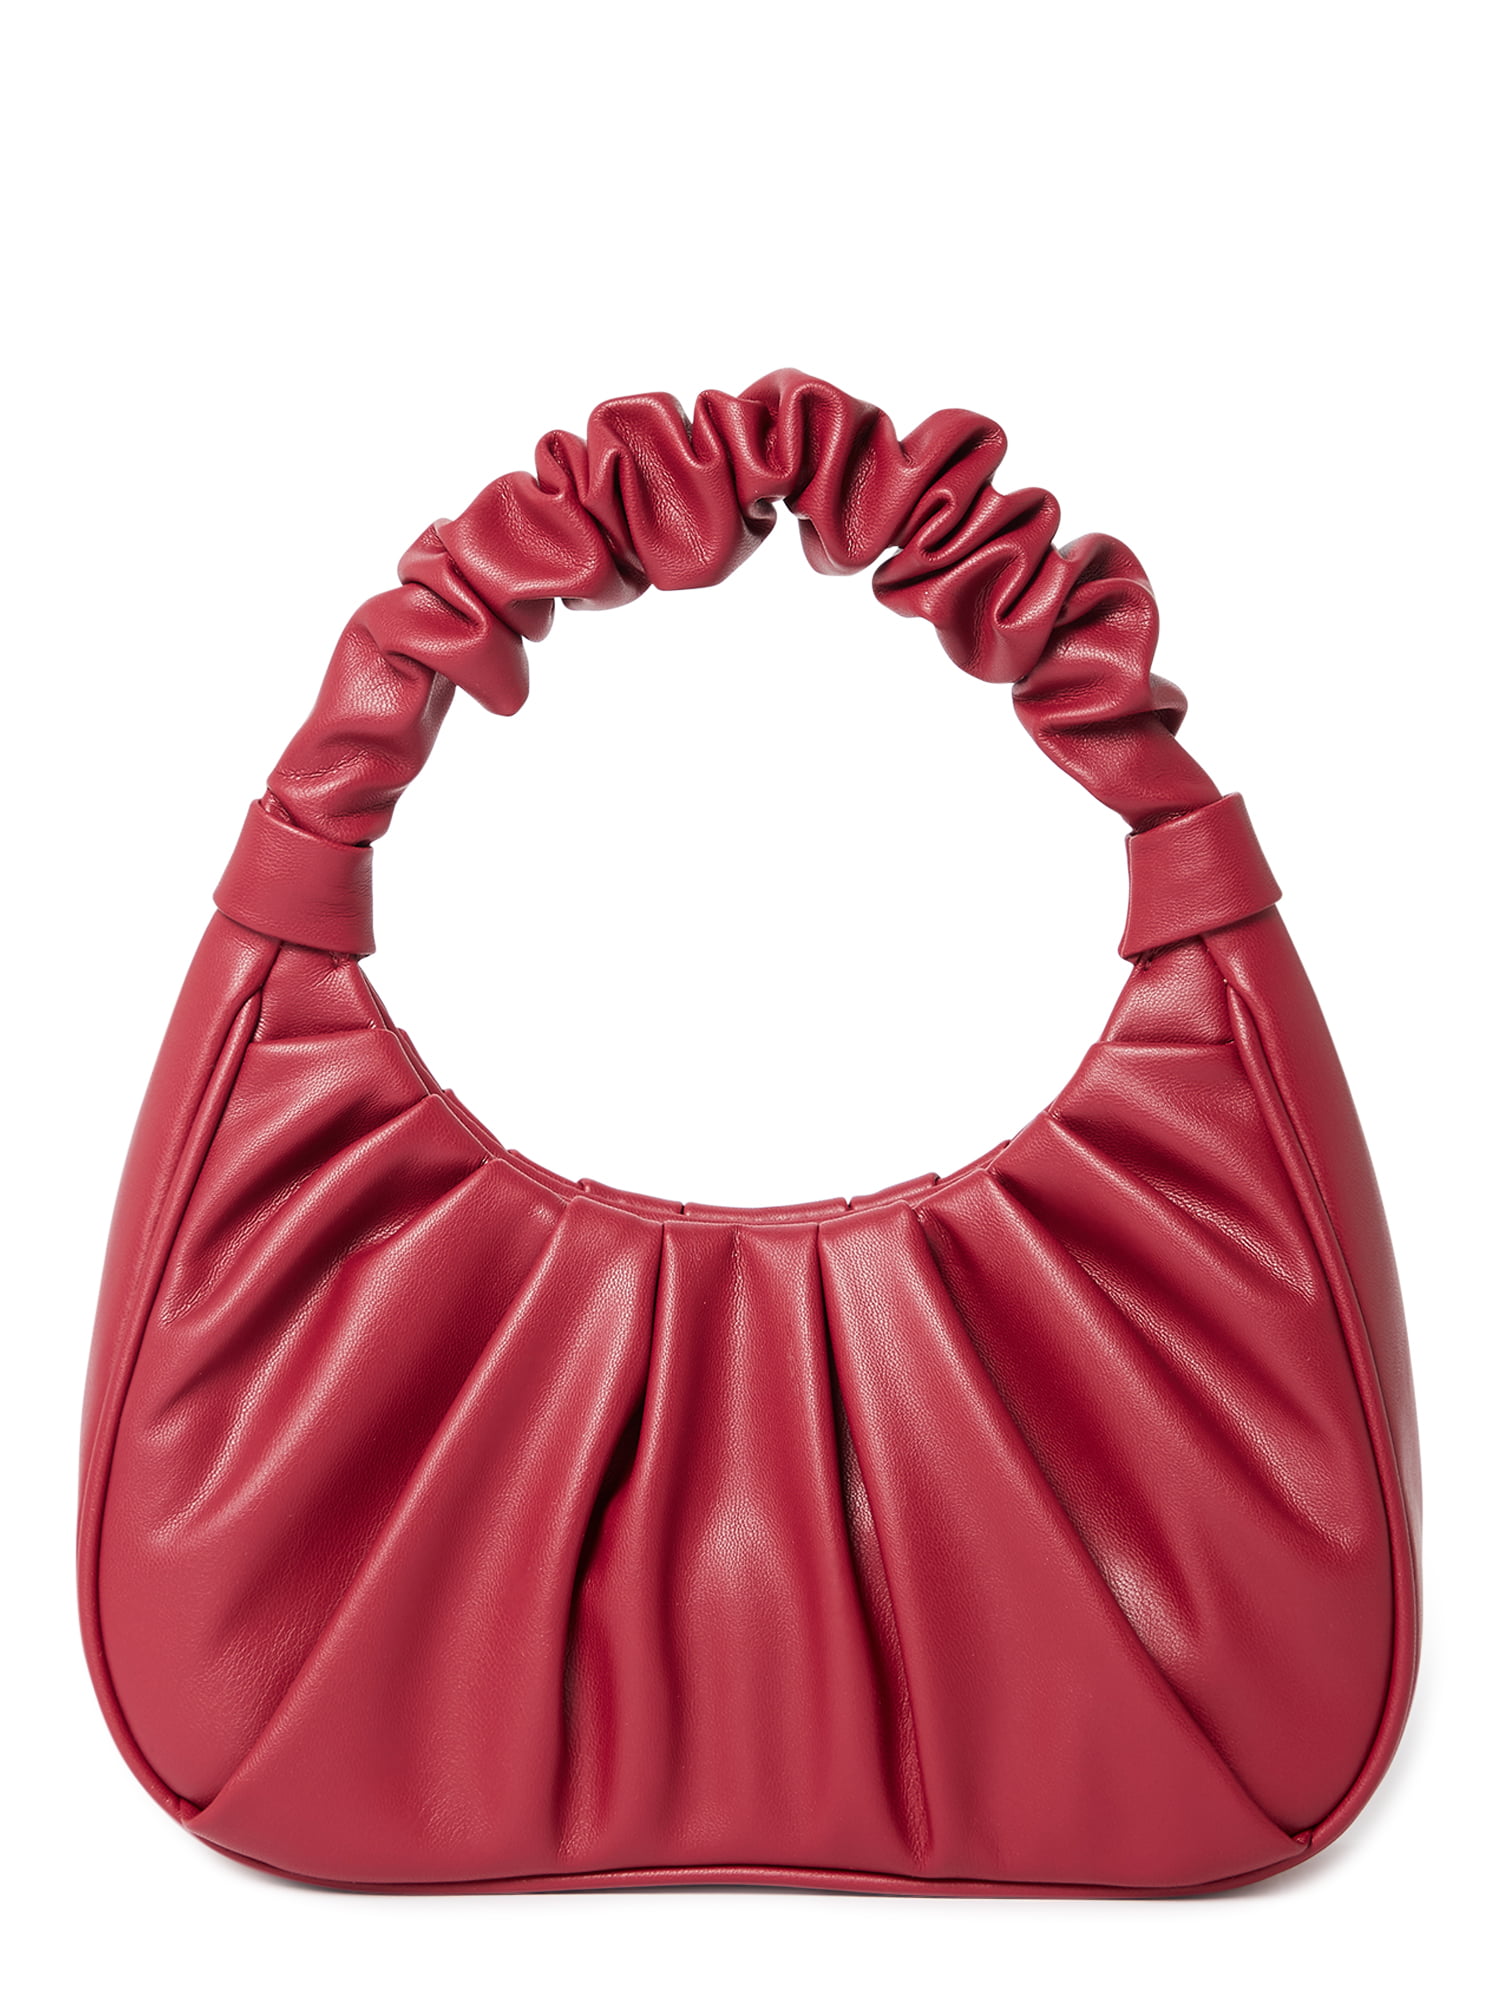 ALEXANDER WANG: Scrunchie bag in velvet with rhinestones - Indigo |  ALEXANDER WANG mini bag 20423R16T online at GIGLIO.COM